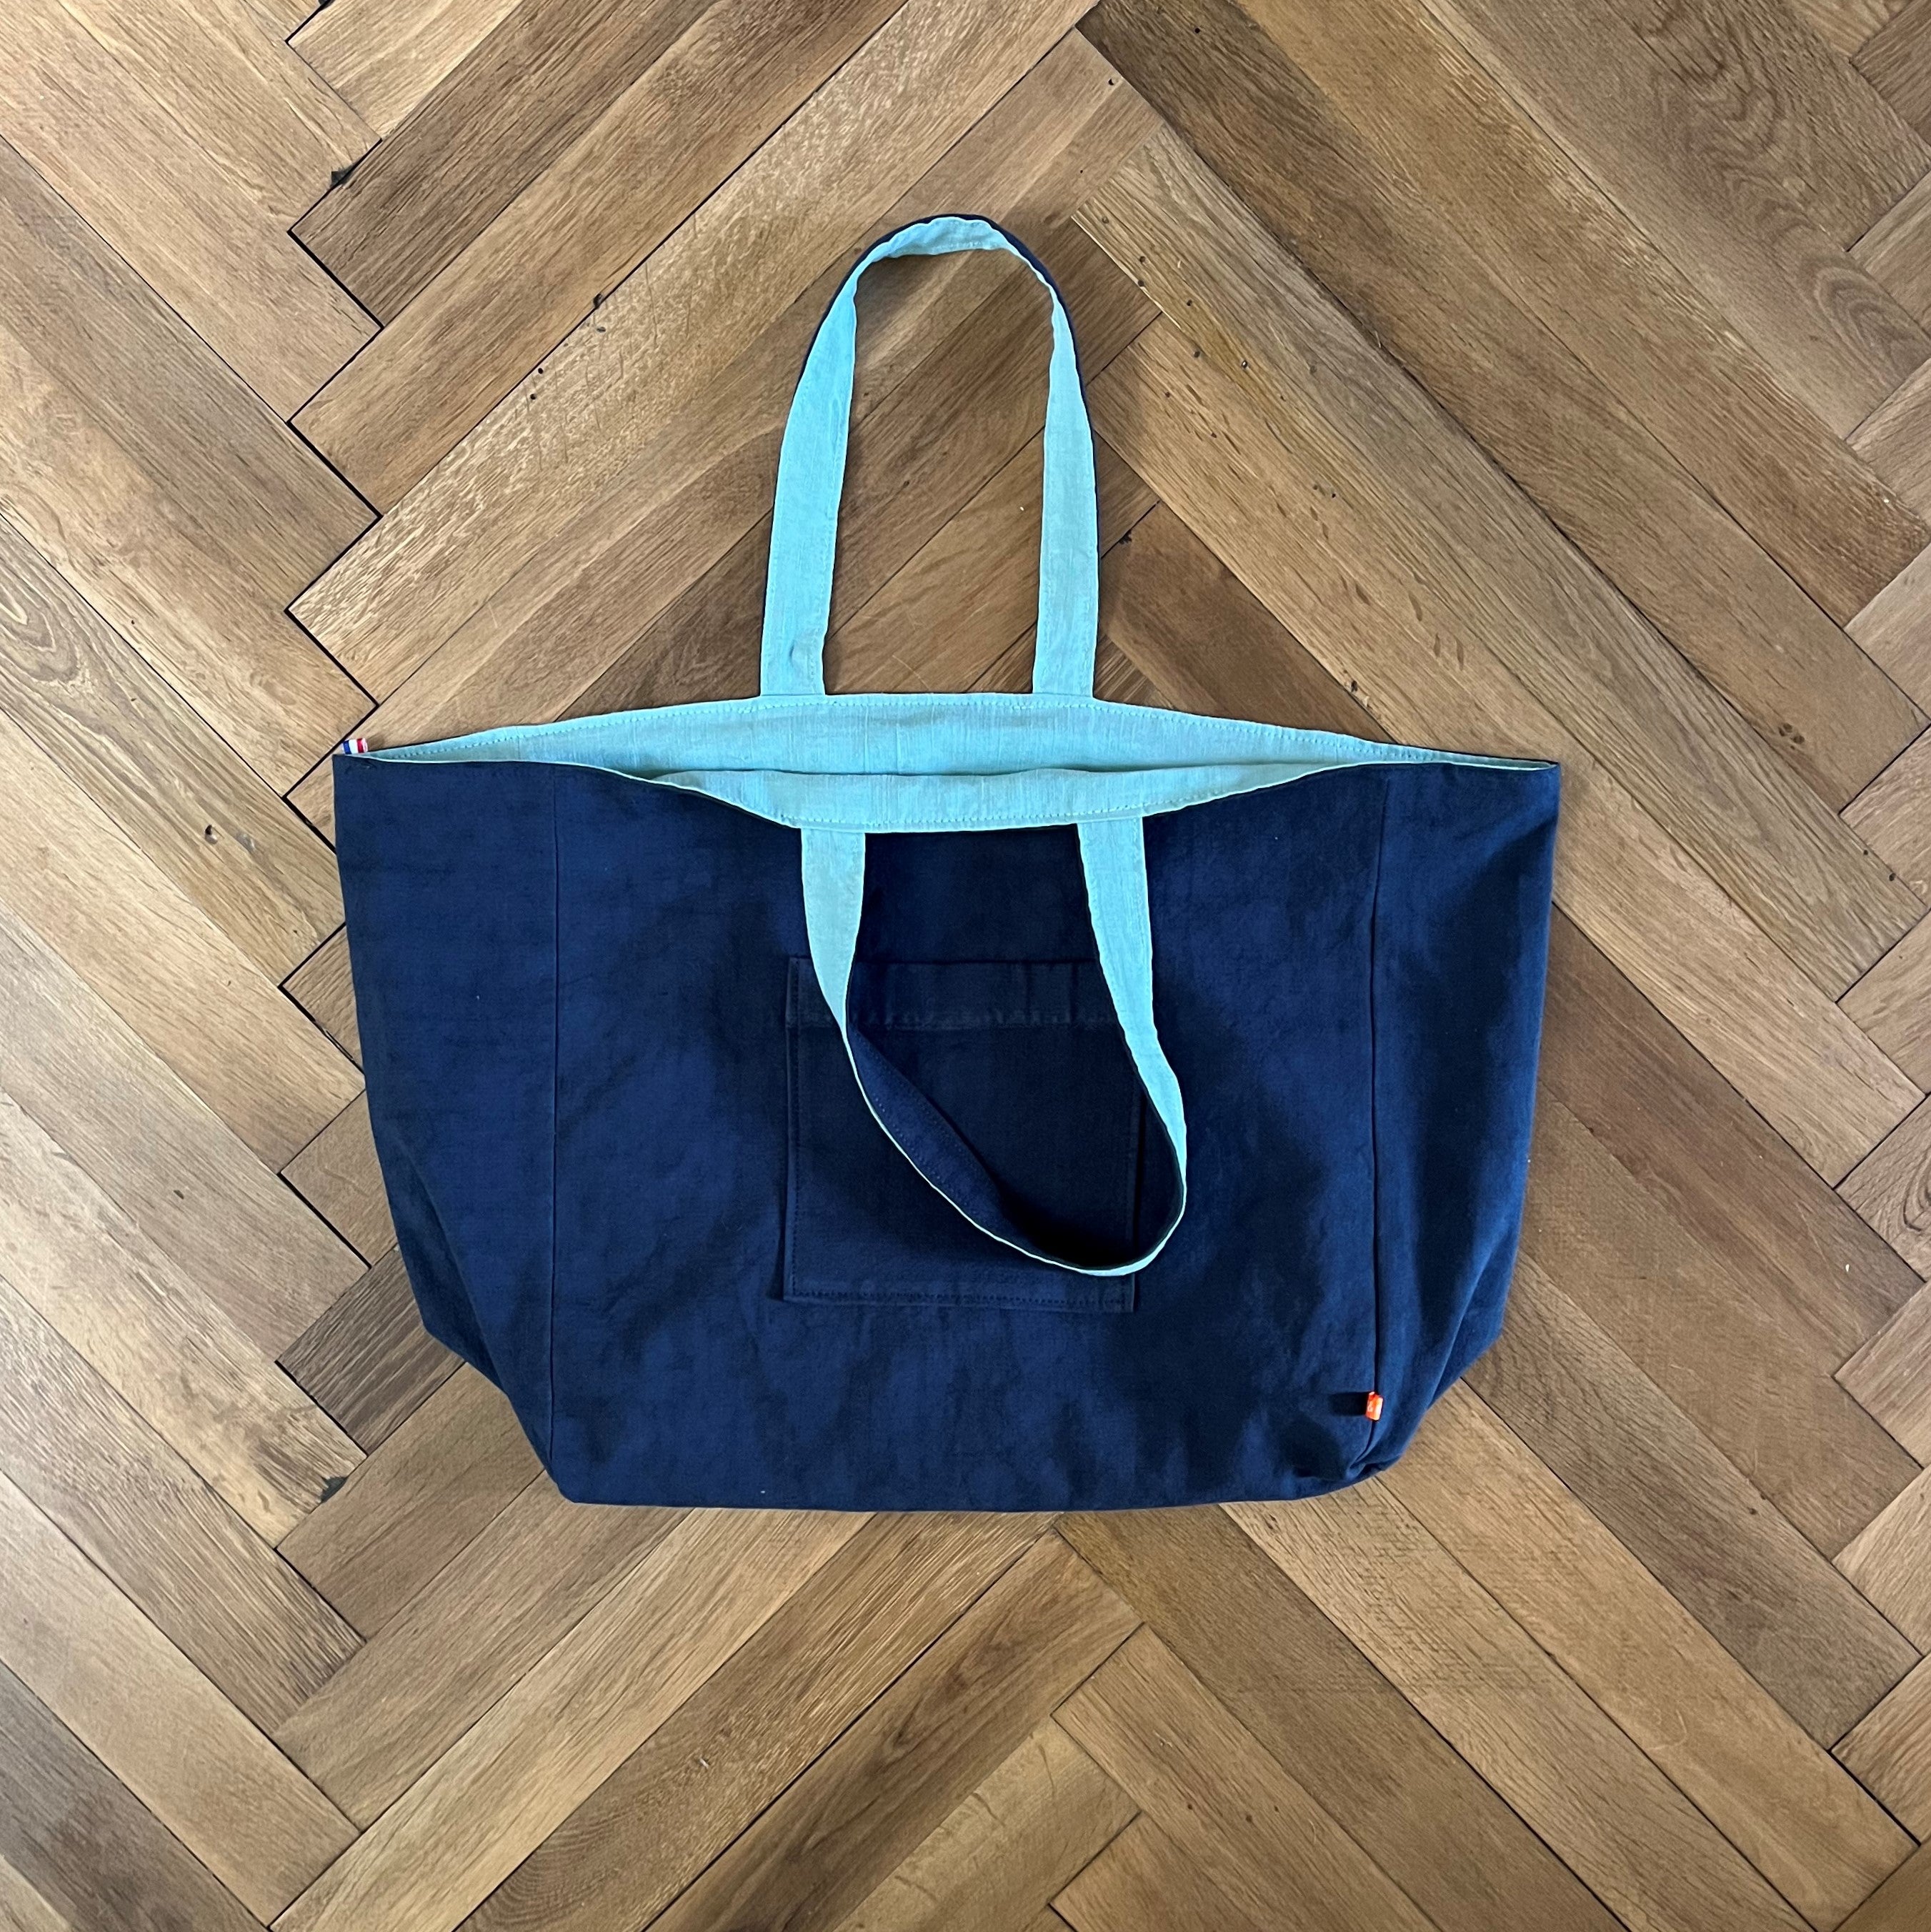 Les sacs à main made in France - Marques de France